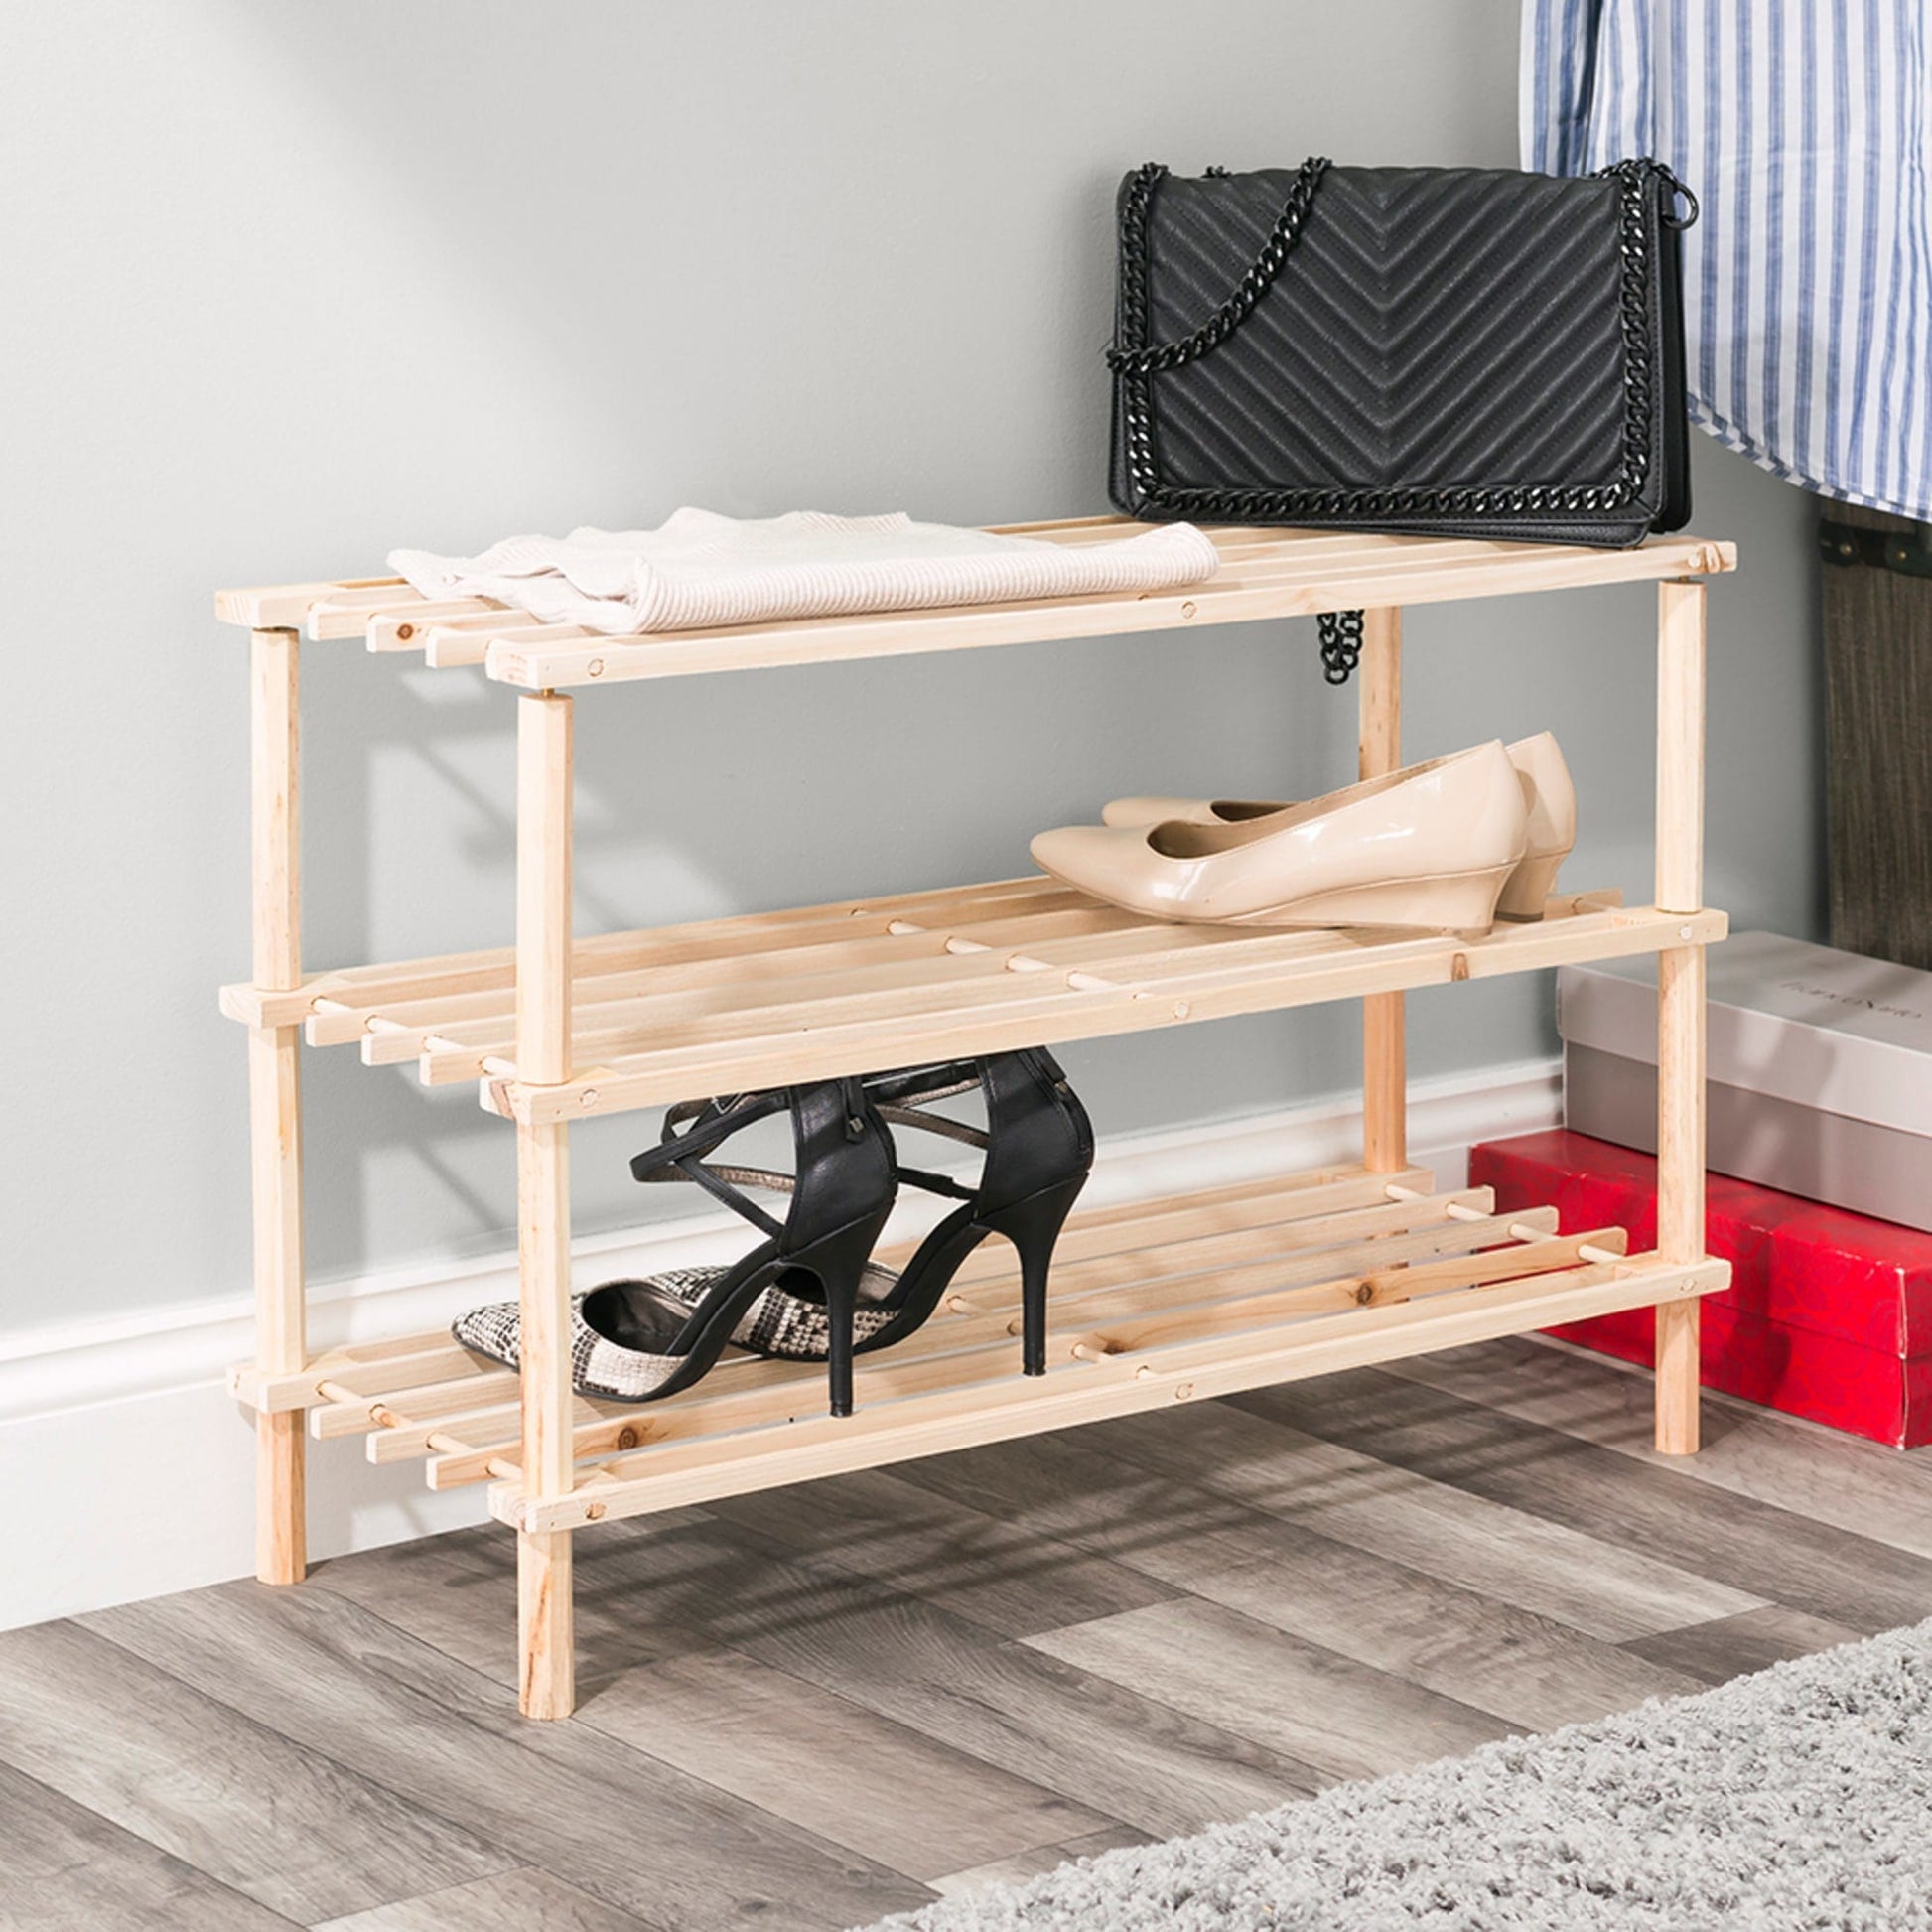 4-Shelf Closet Shoe Rack with Natural Wood Frame and Chrome Wire Shelves